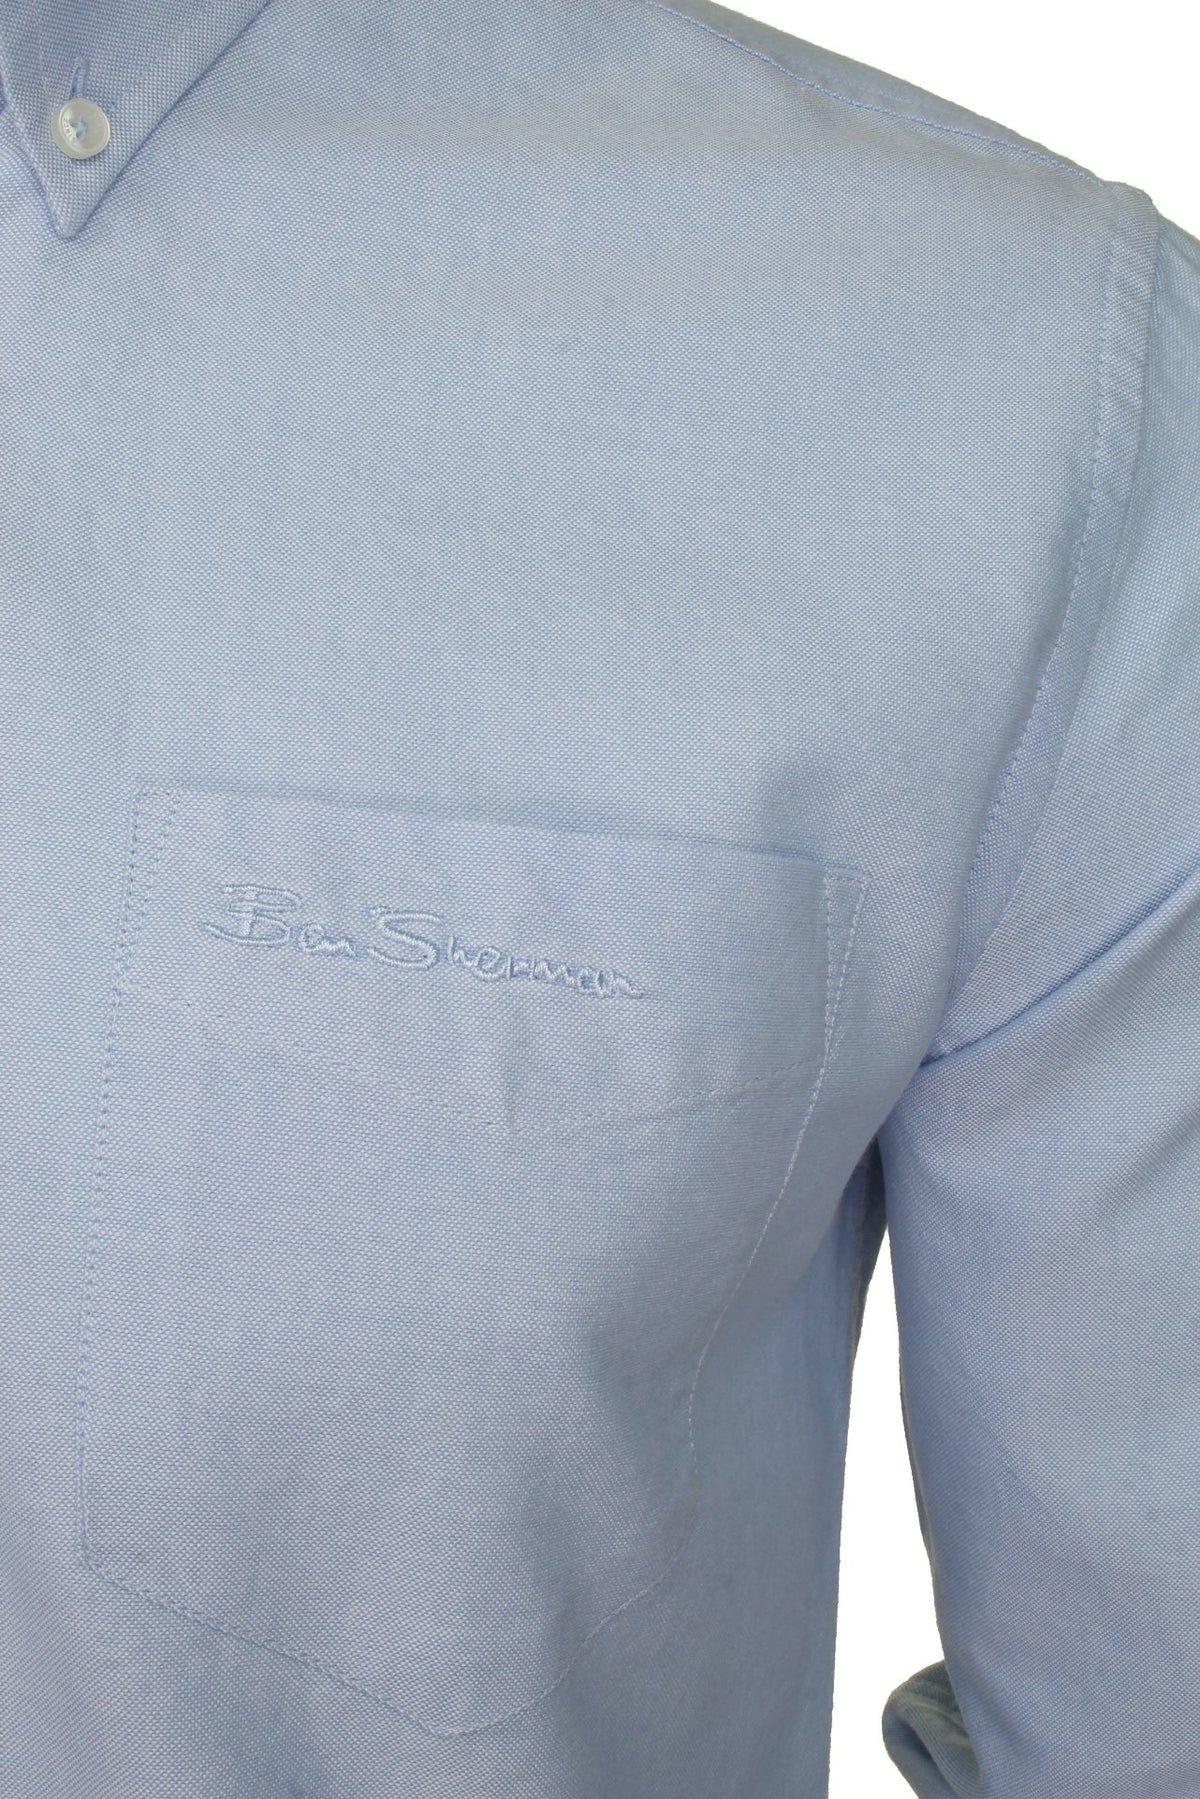 Ben Sherman Mens Oxford Shirt Long Sleeved (Embroidered Logo), 02, 48578, Sky (Embroidered Pocket Logo)